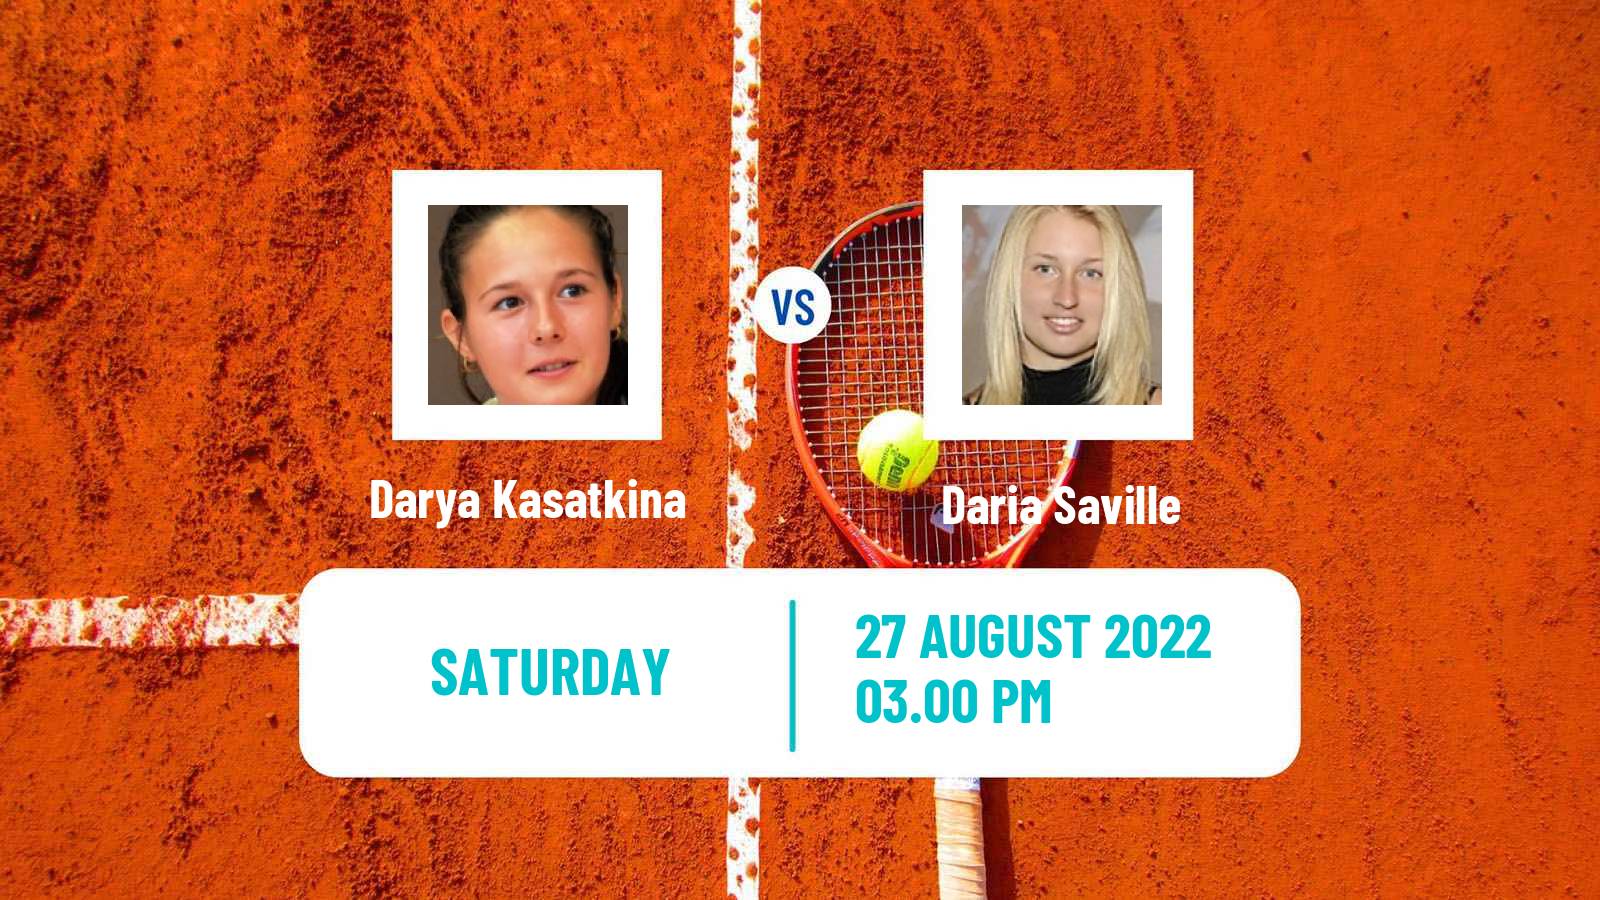 Tennis WTA Granby Darya Kasatkina - Daria Saville